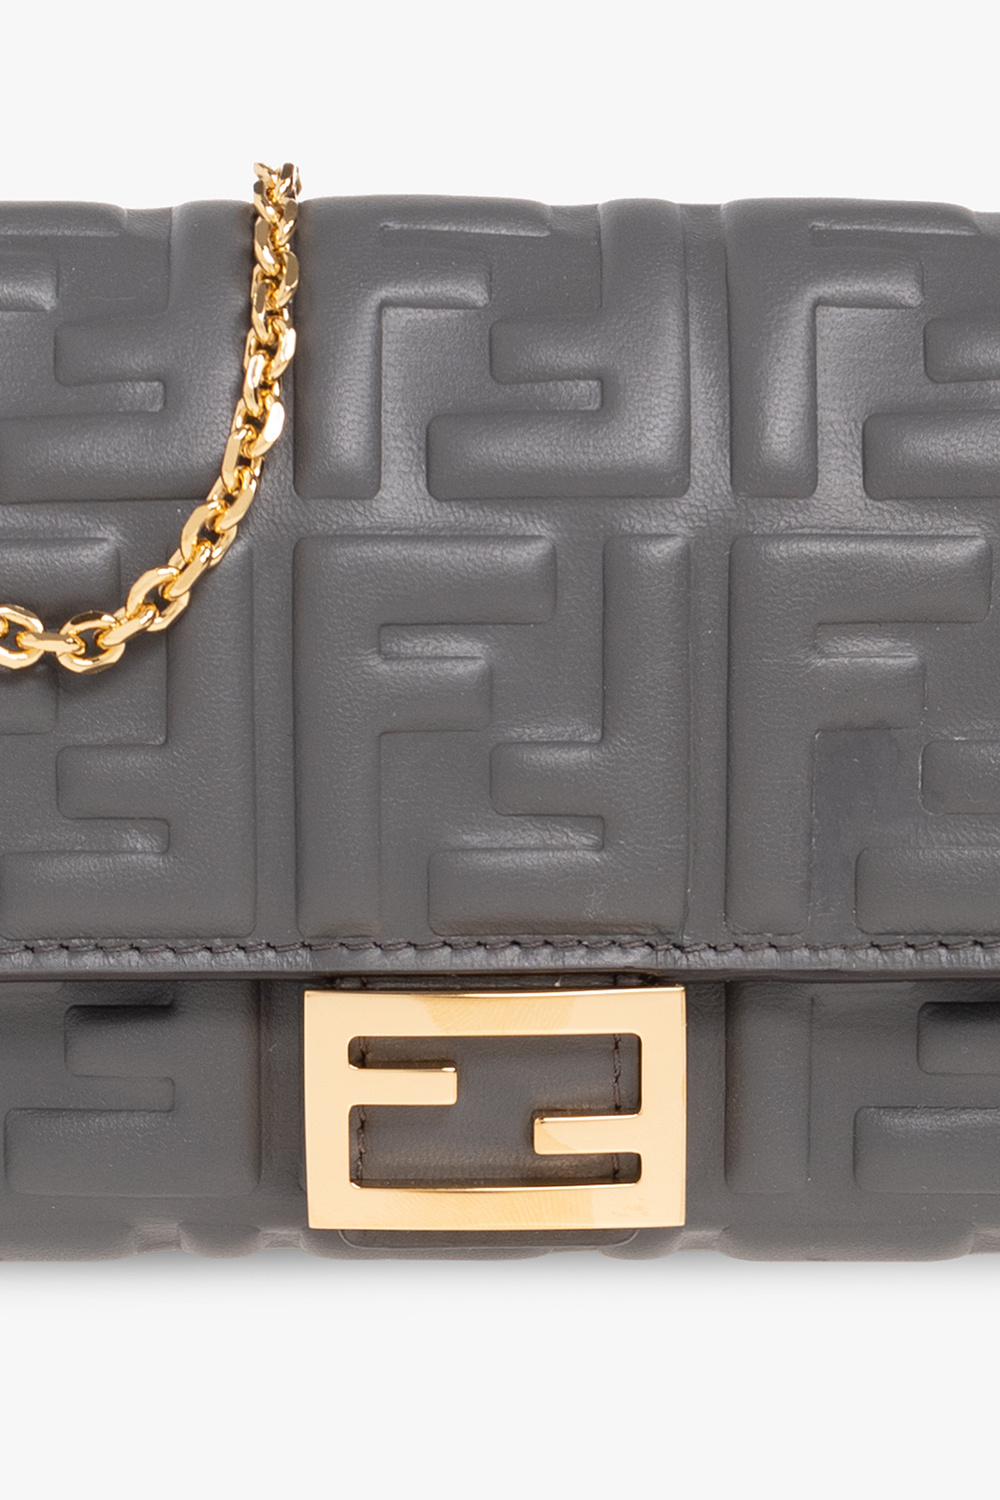 Fendi ‘Baguette’ wallet with chain